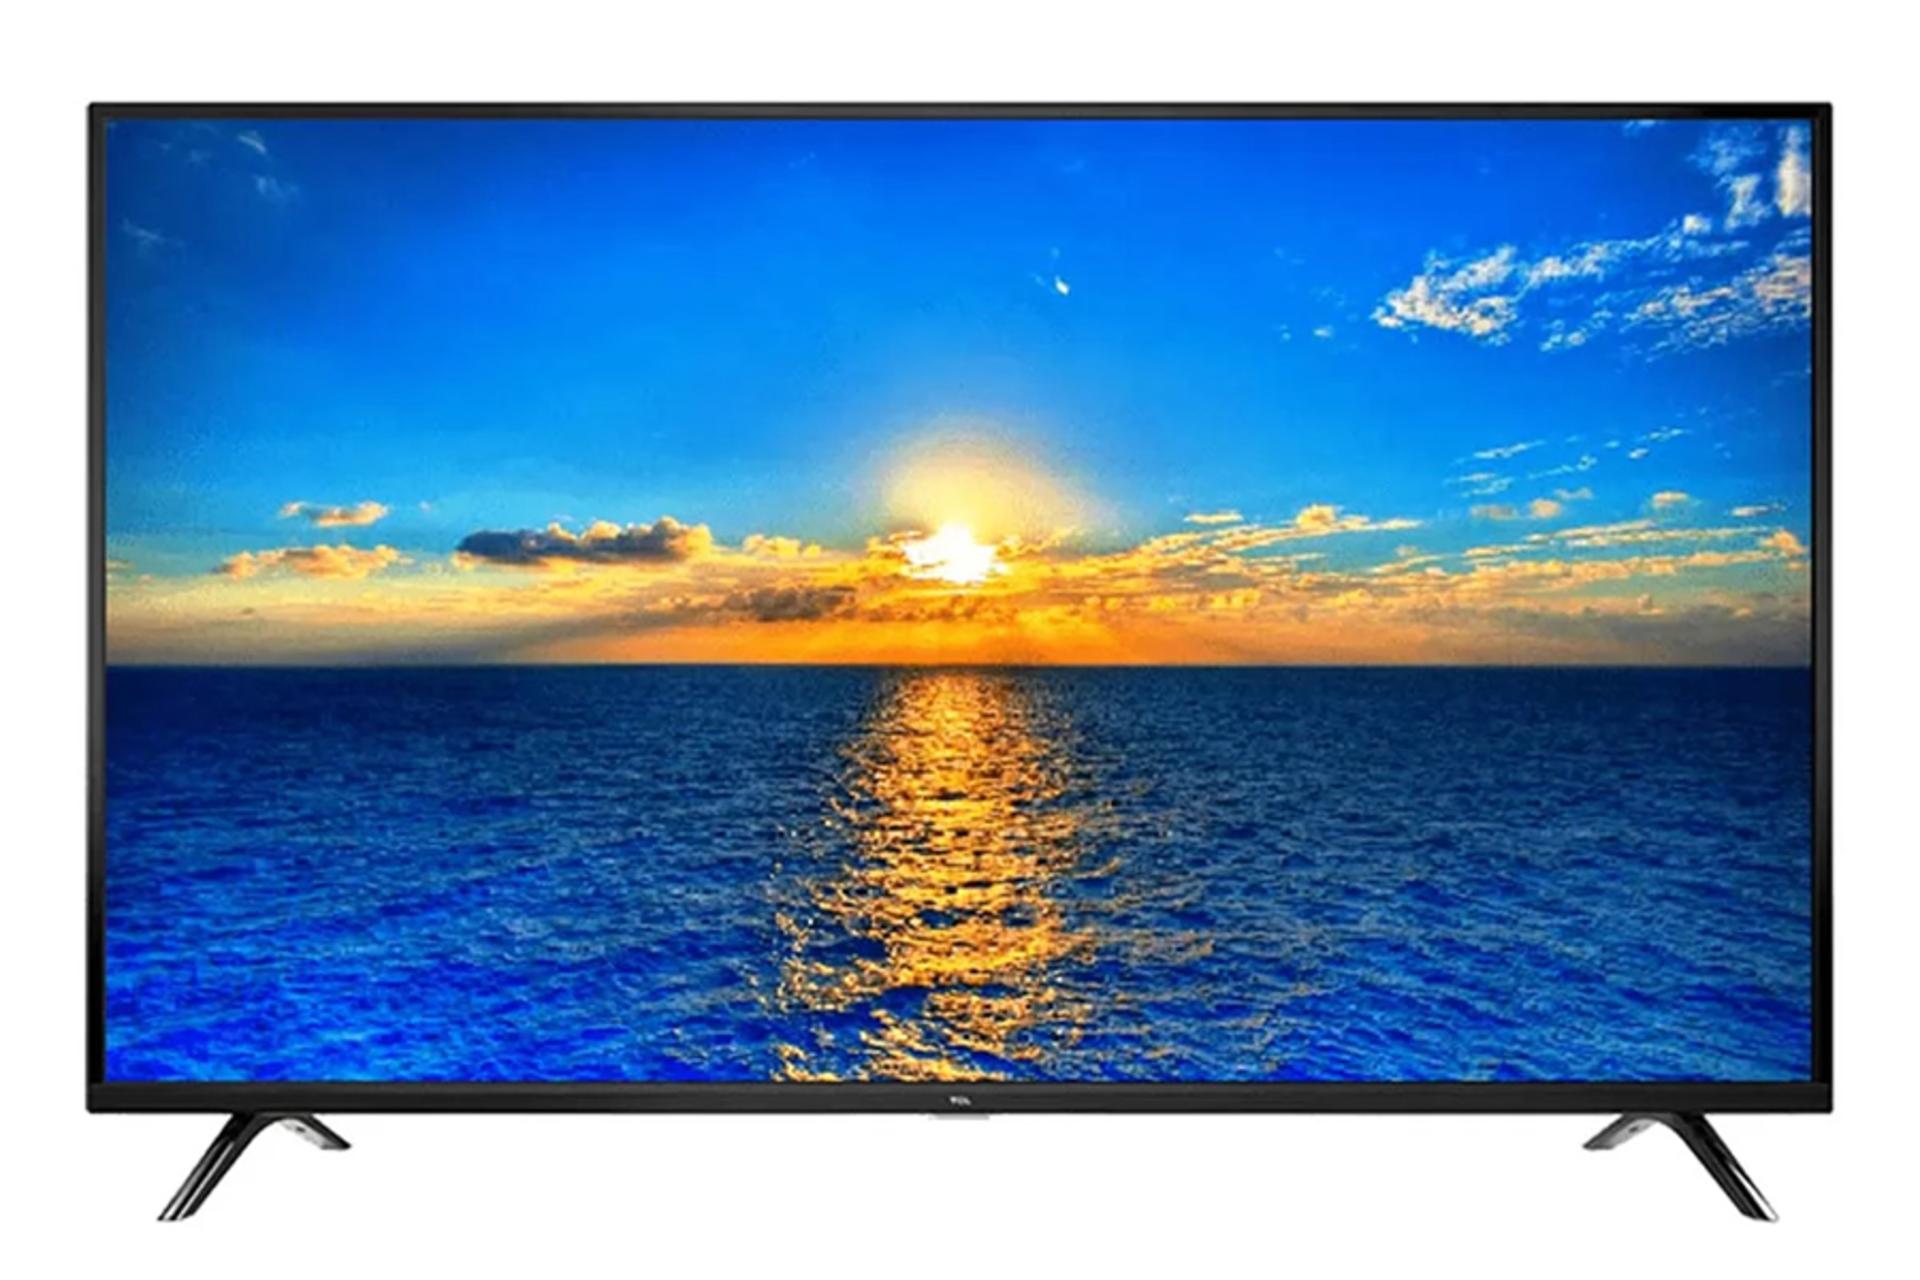 قیمت تلویزیون تی سی ال 43D3000 مدل 43 اینچ + مشخصات